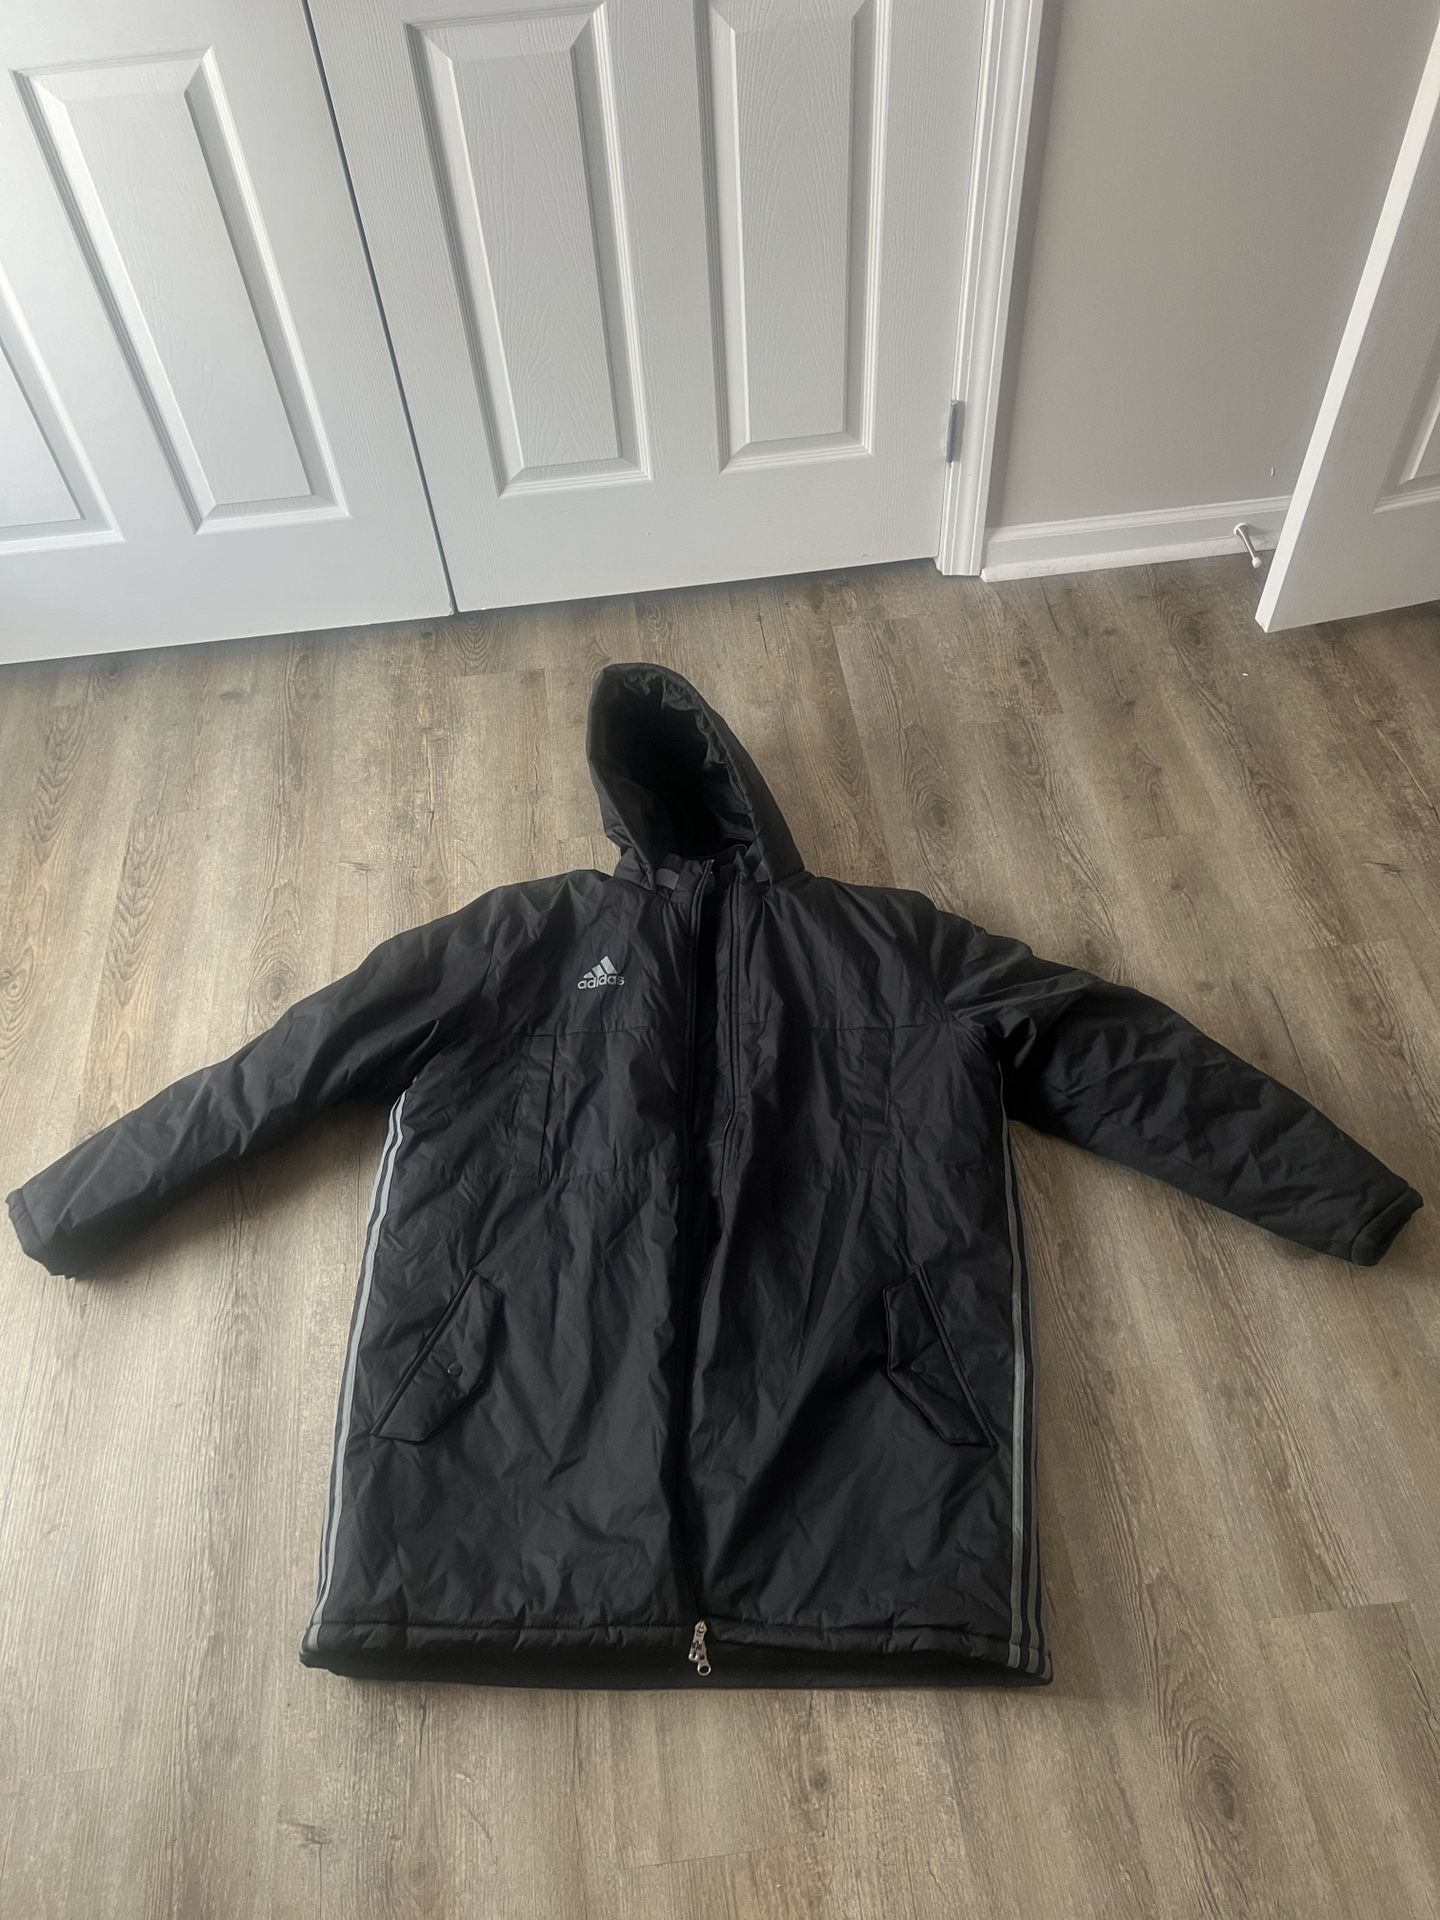 Adidas Winter Jacket With Hood Size XXL